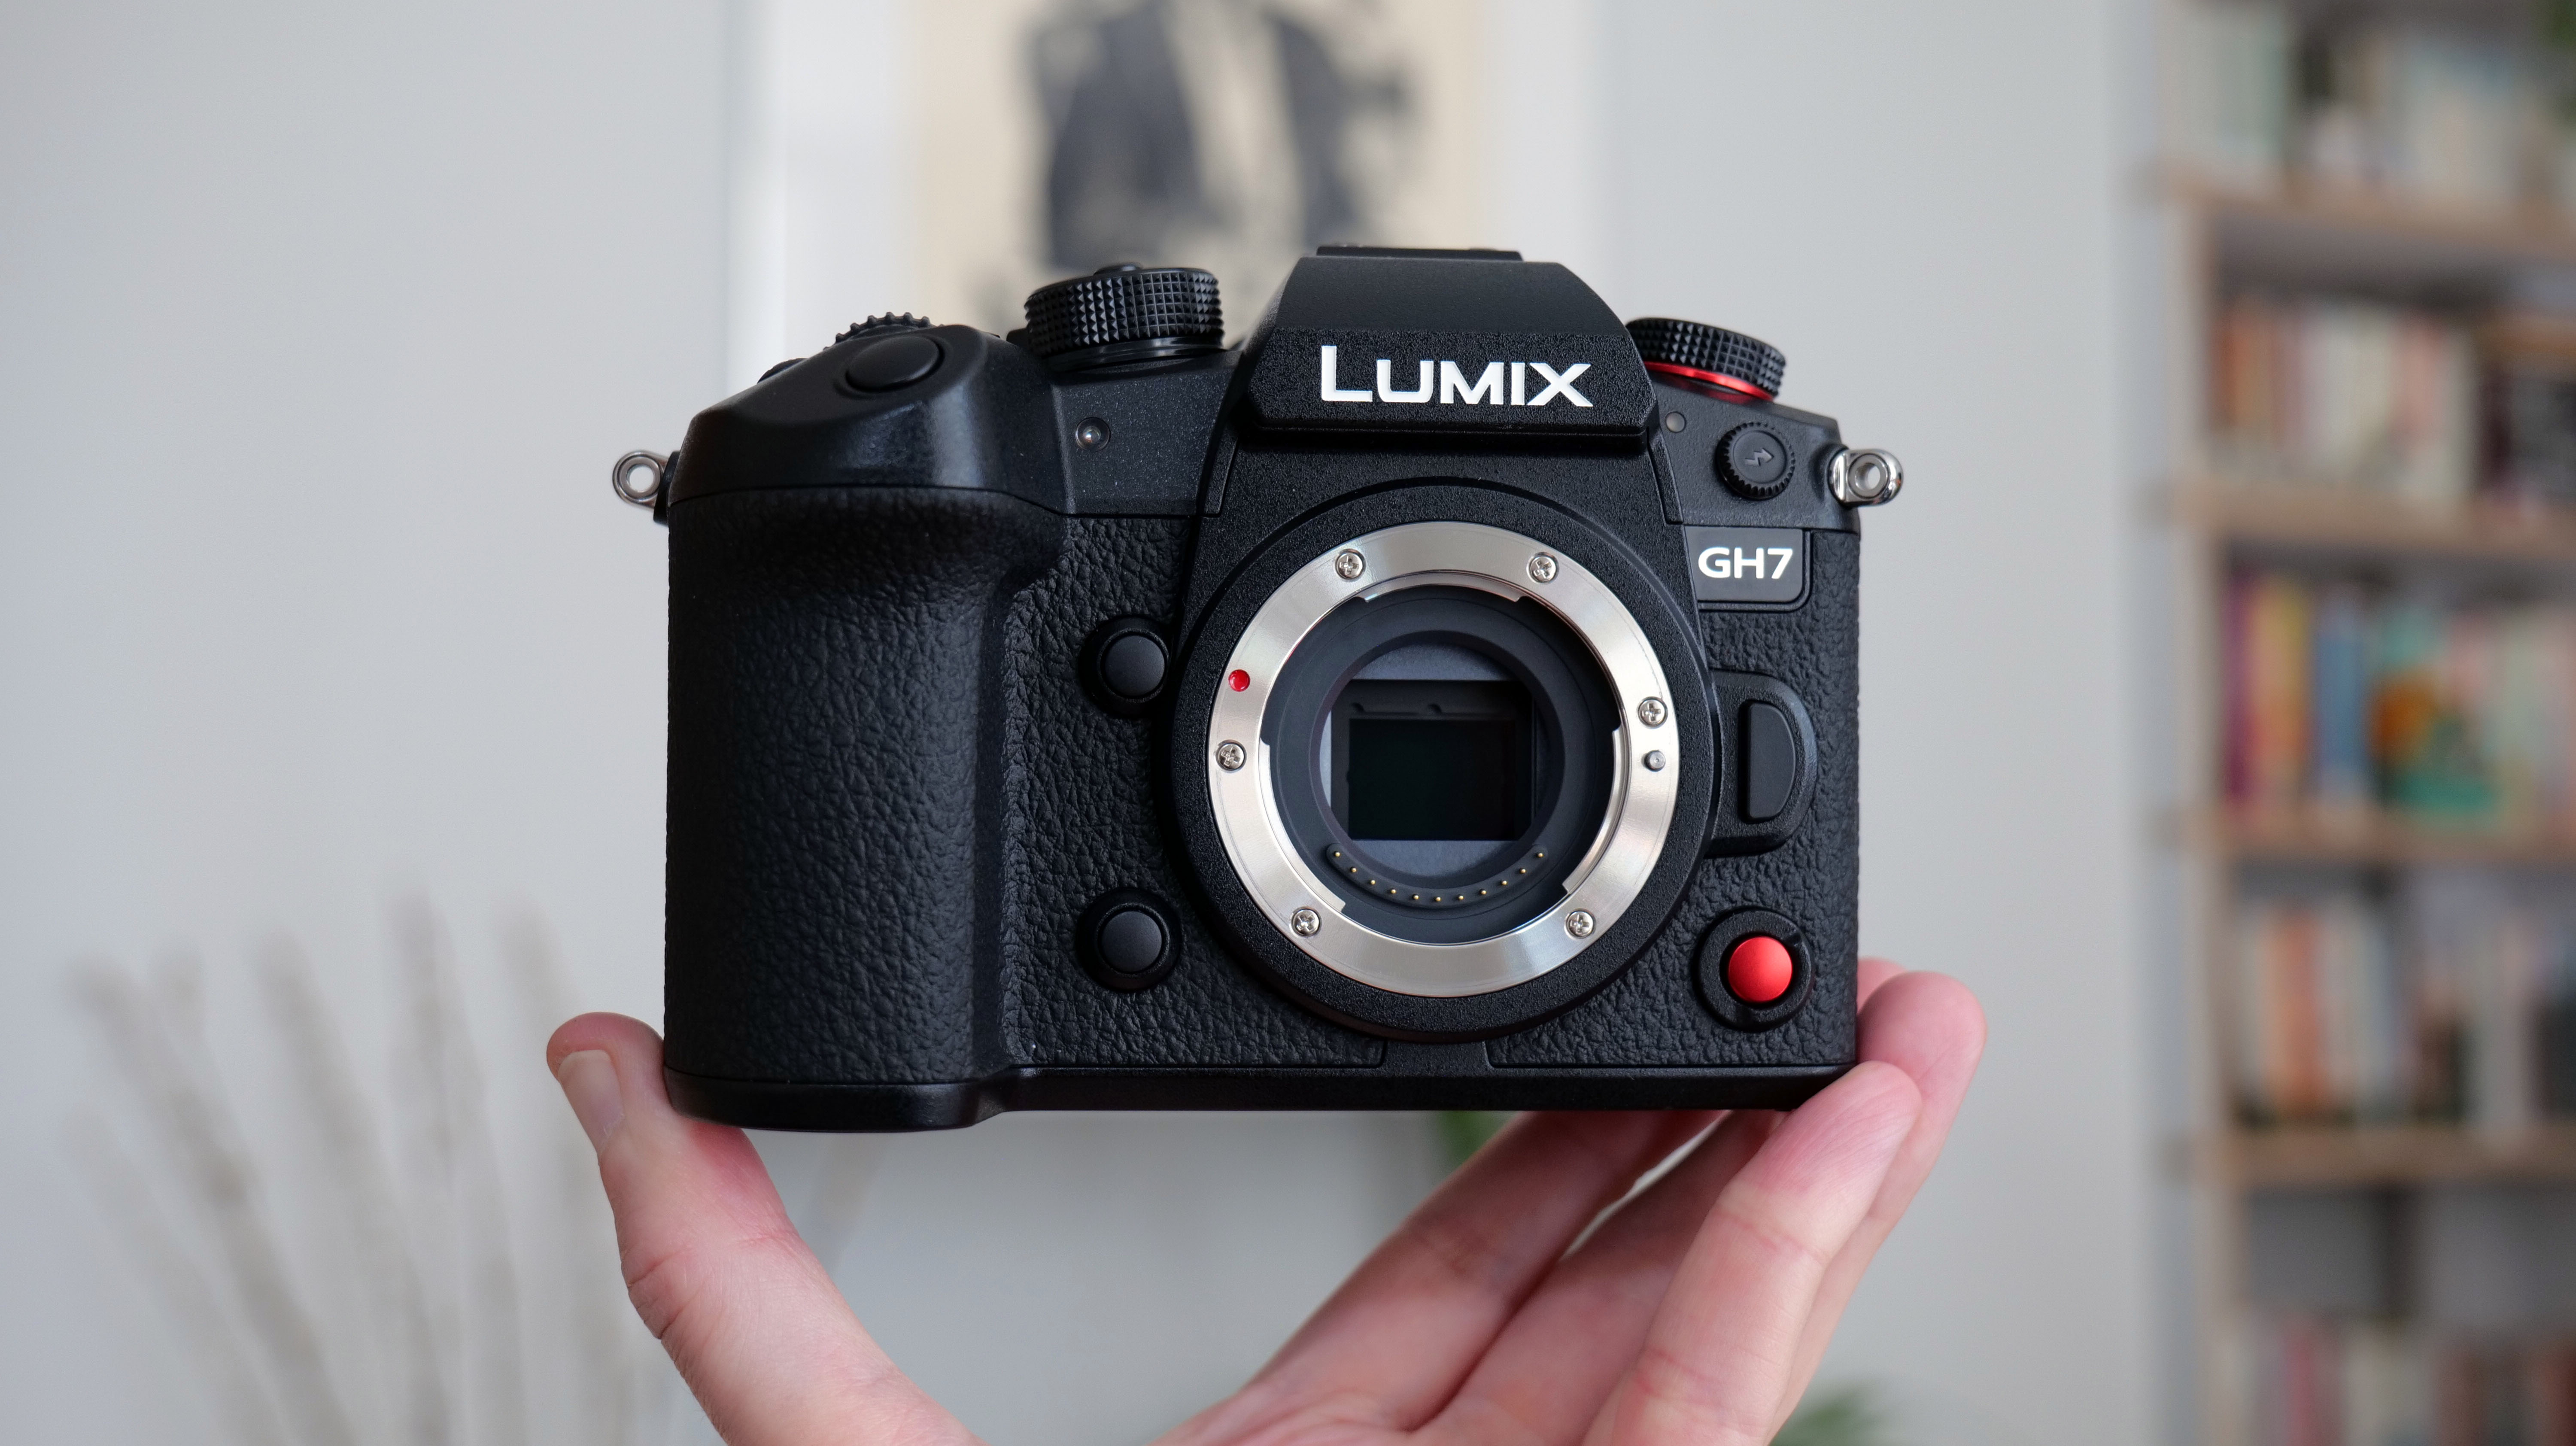 Panasonic Lumix GH7 camera in the hand